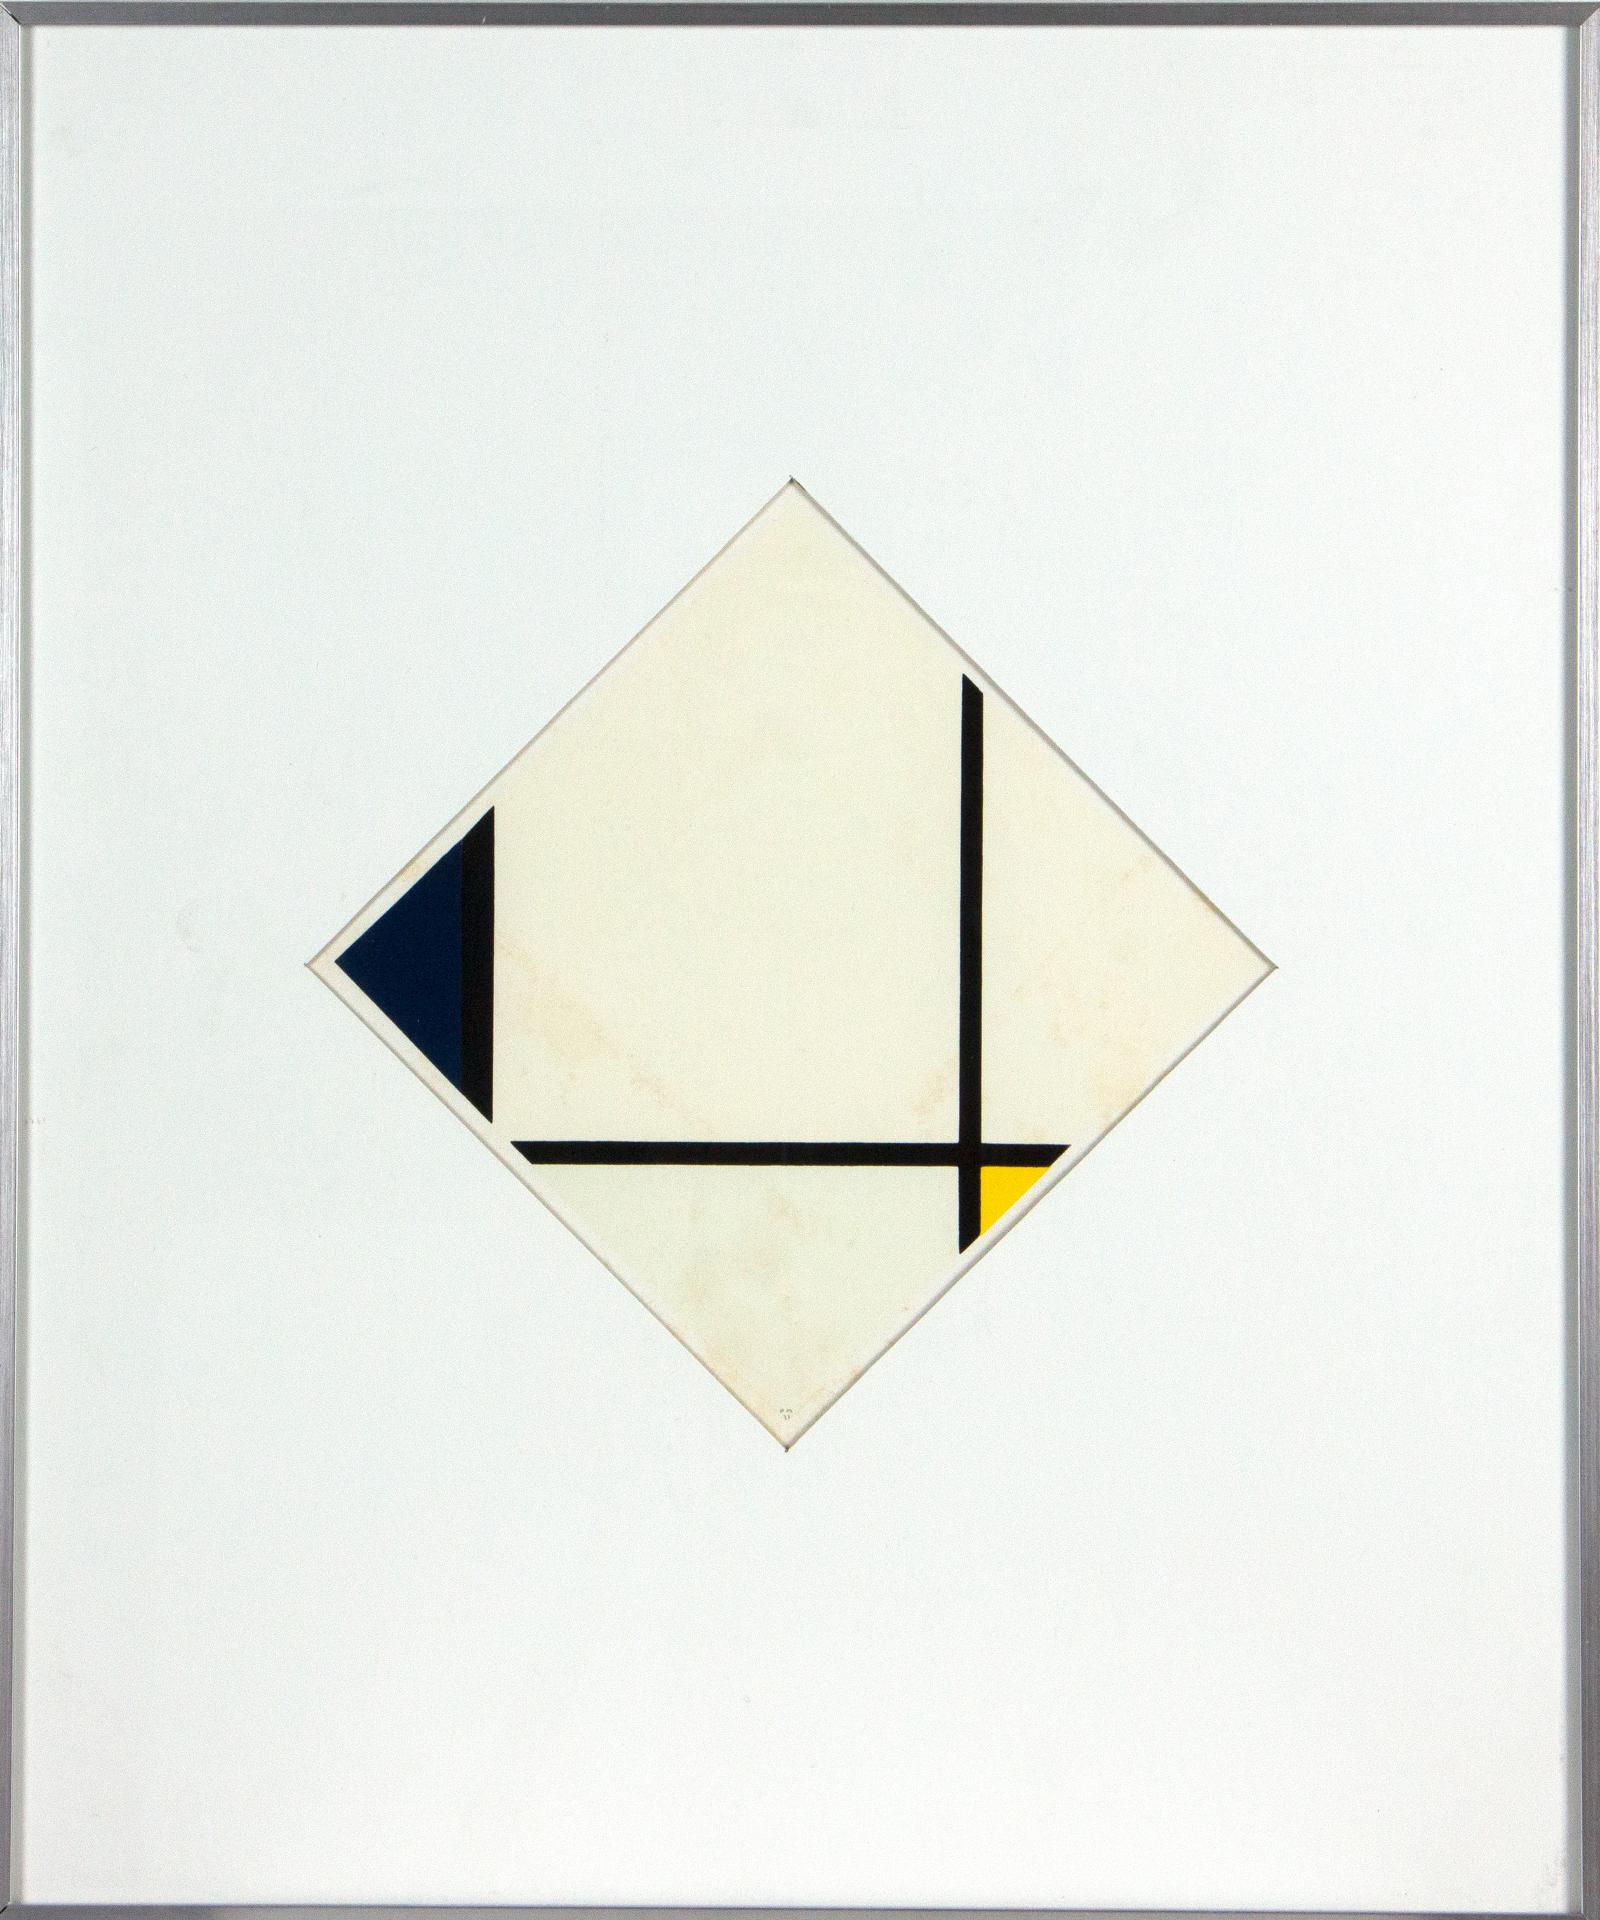 Piet Mondrian - Composition I, 1921